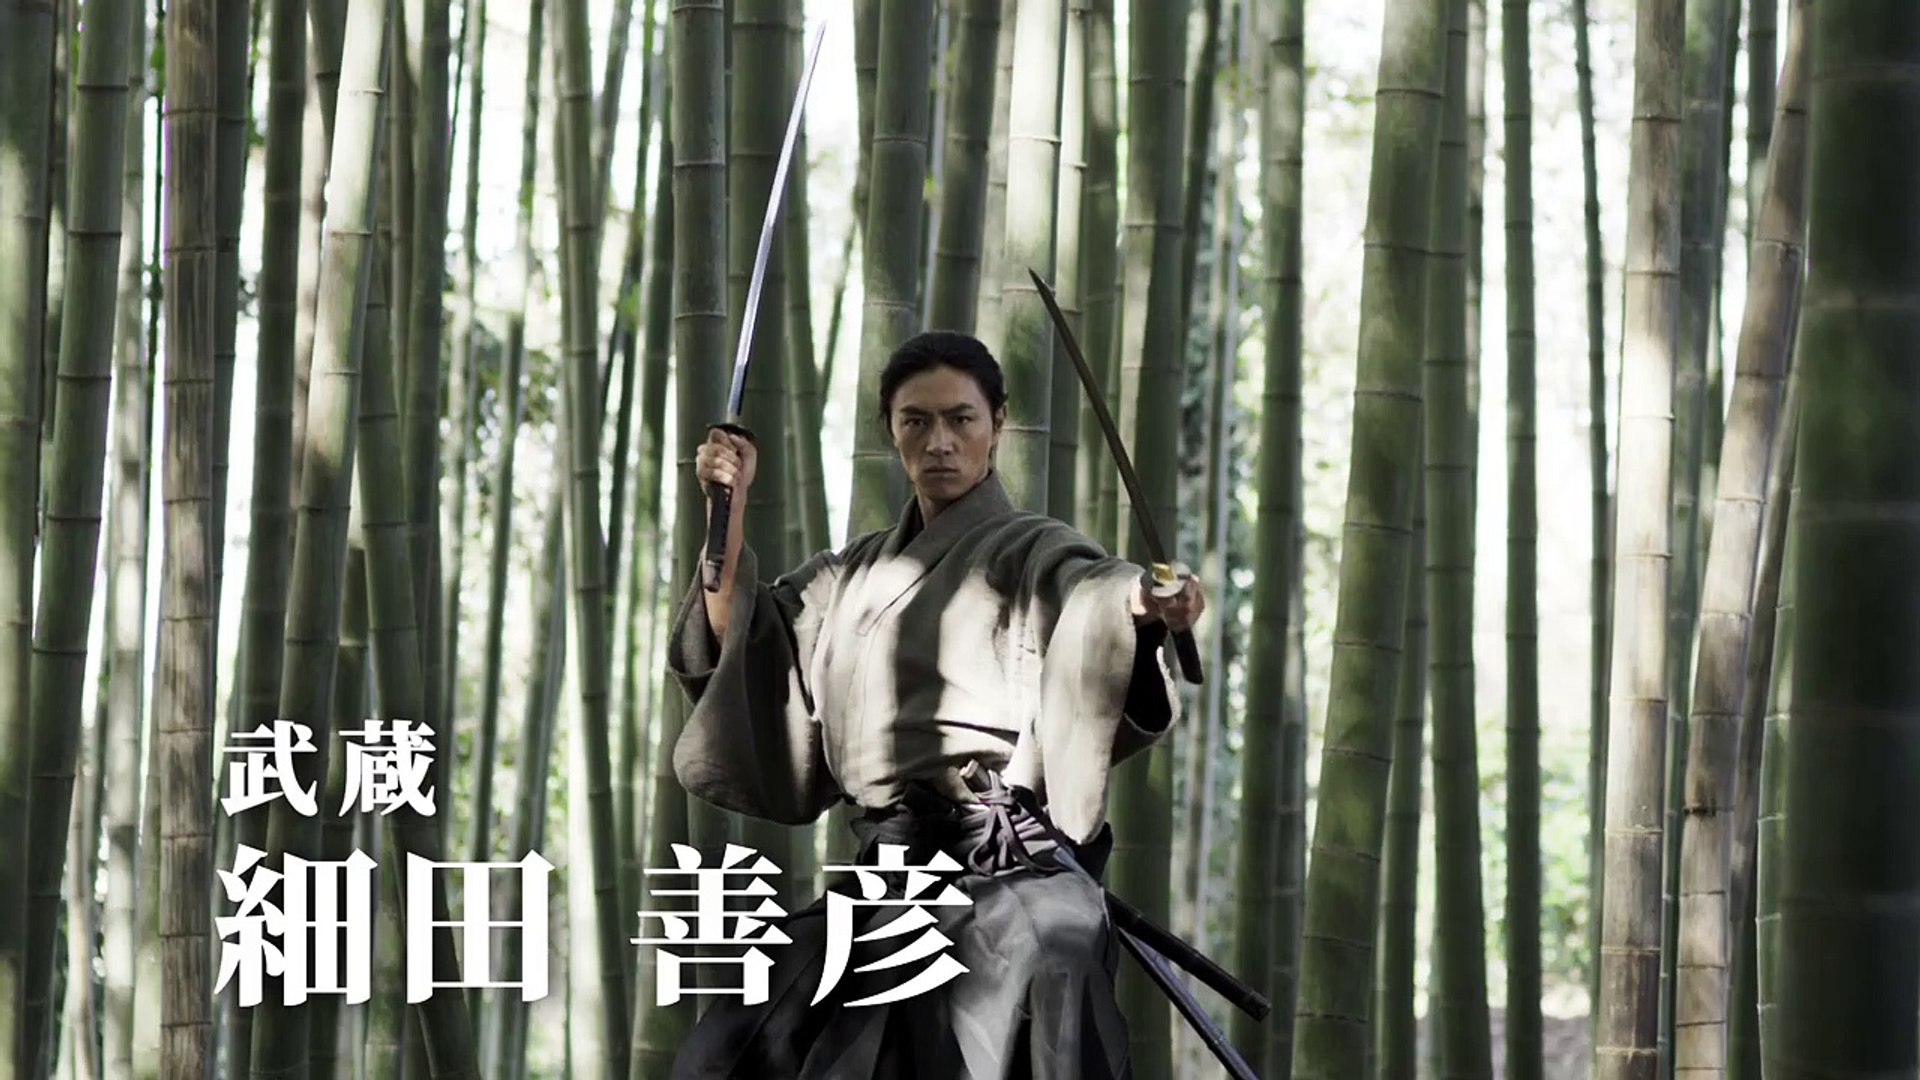 Musashi theatrical trailer - Yasuo Mikami-directed chanbara